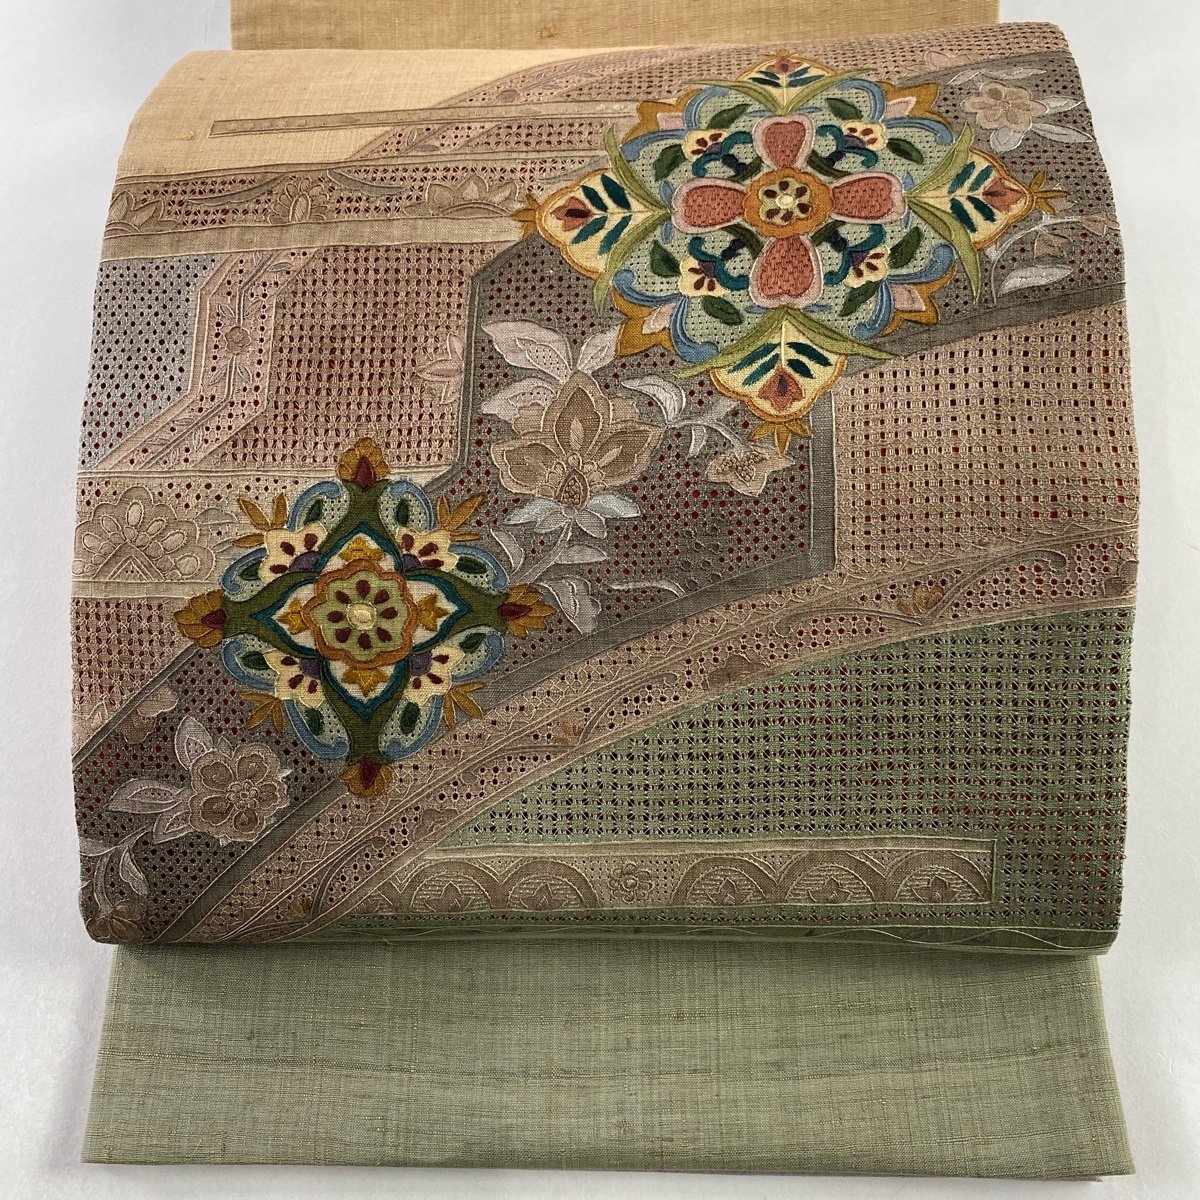 ヤフオク! -袋帯 正絹 刺繍の中古品・新品・未使用品一覧